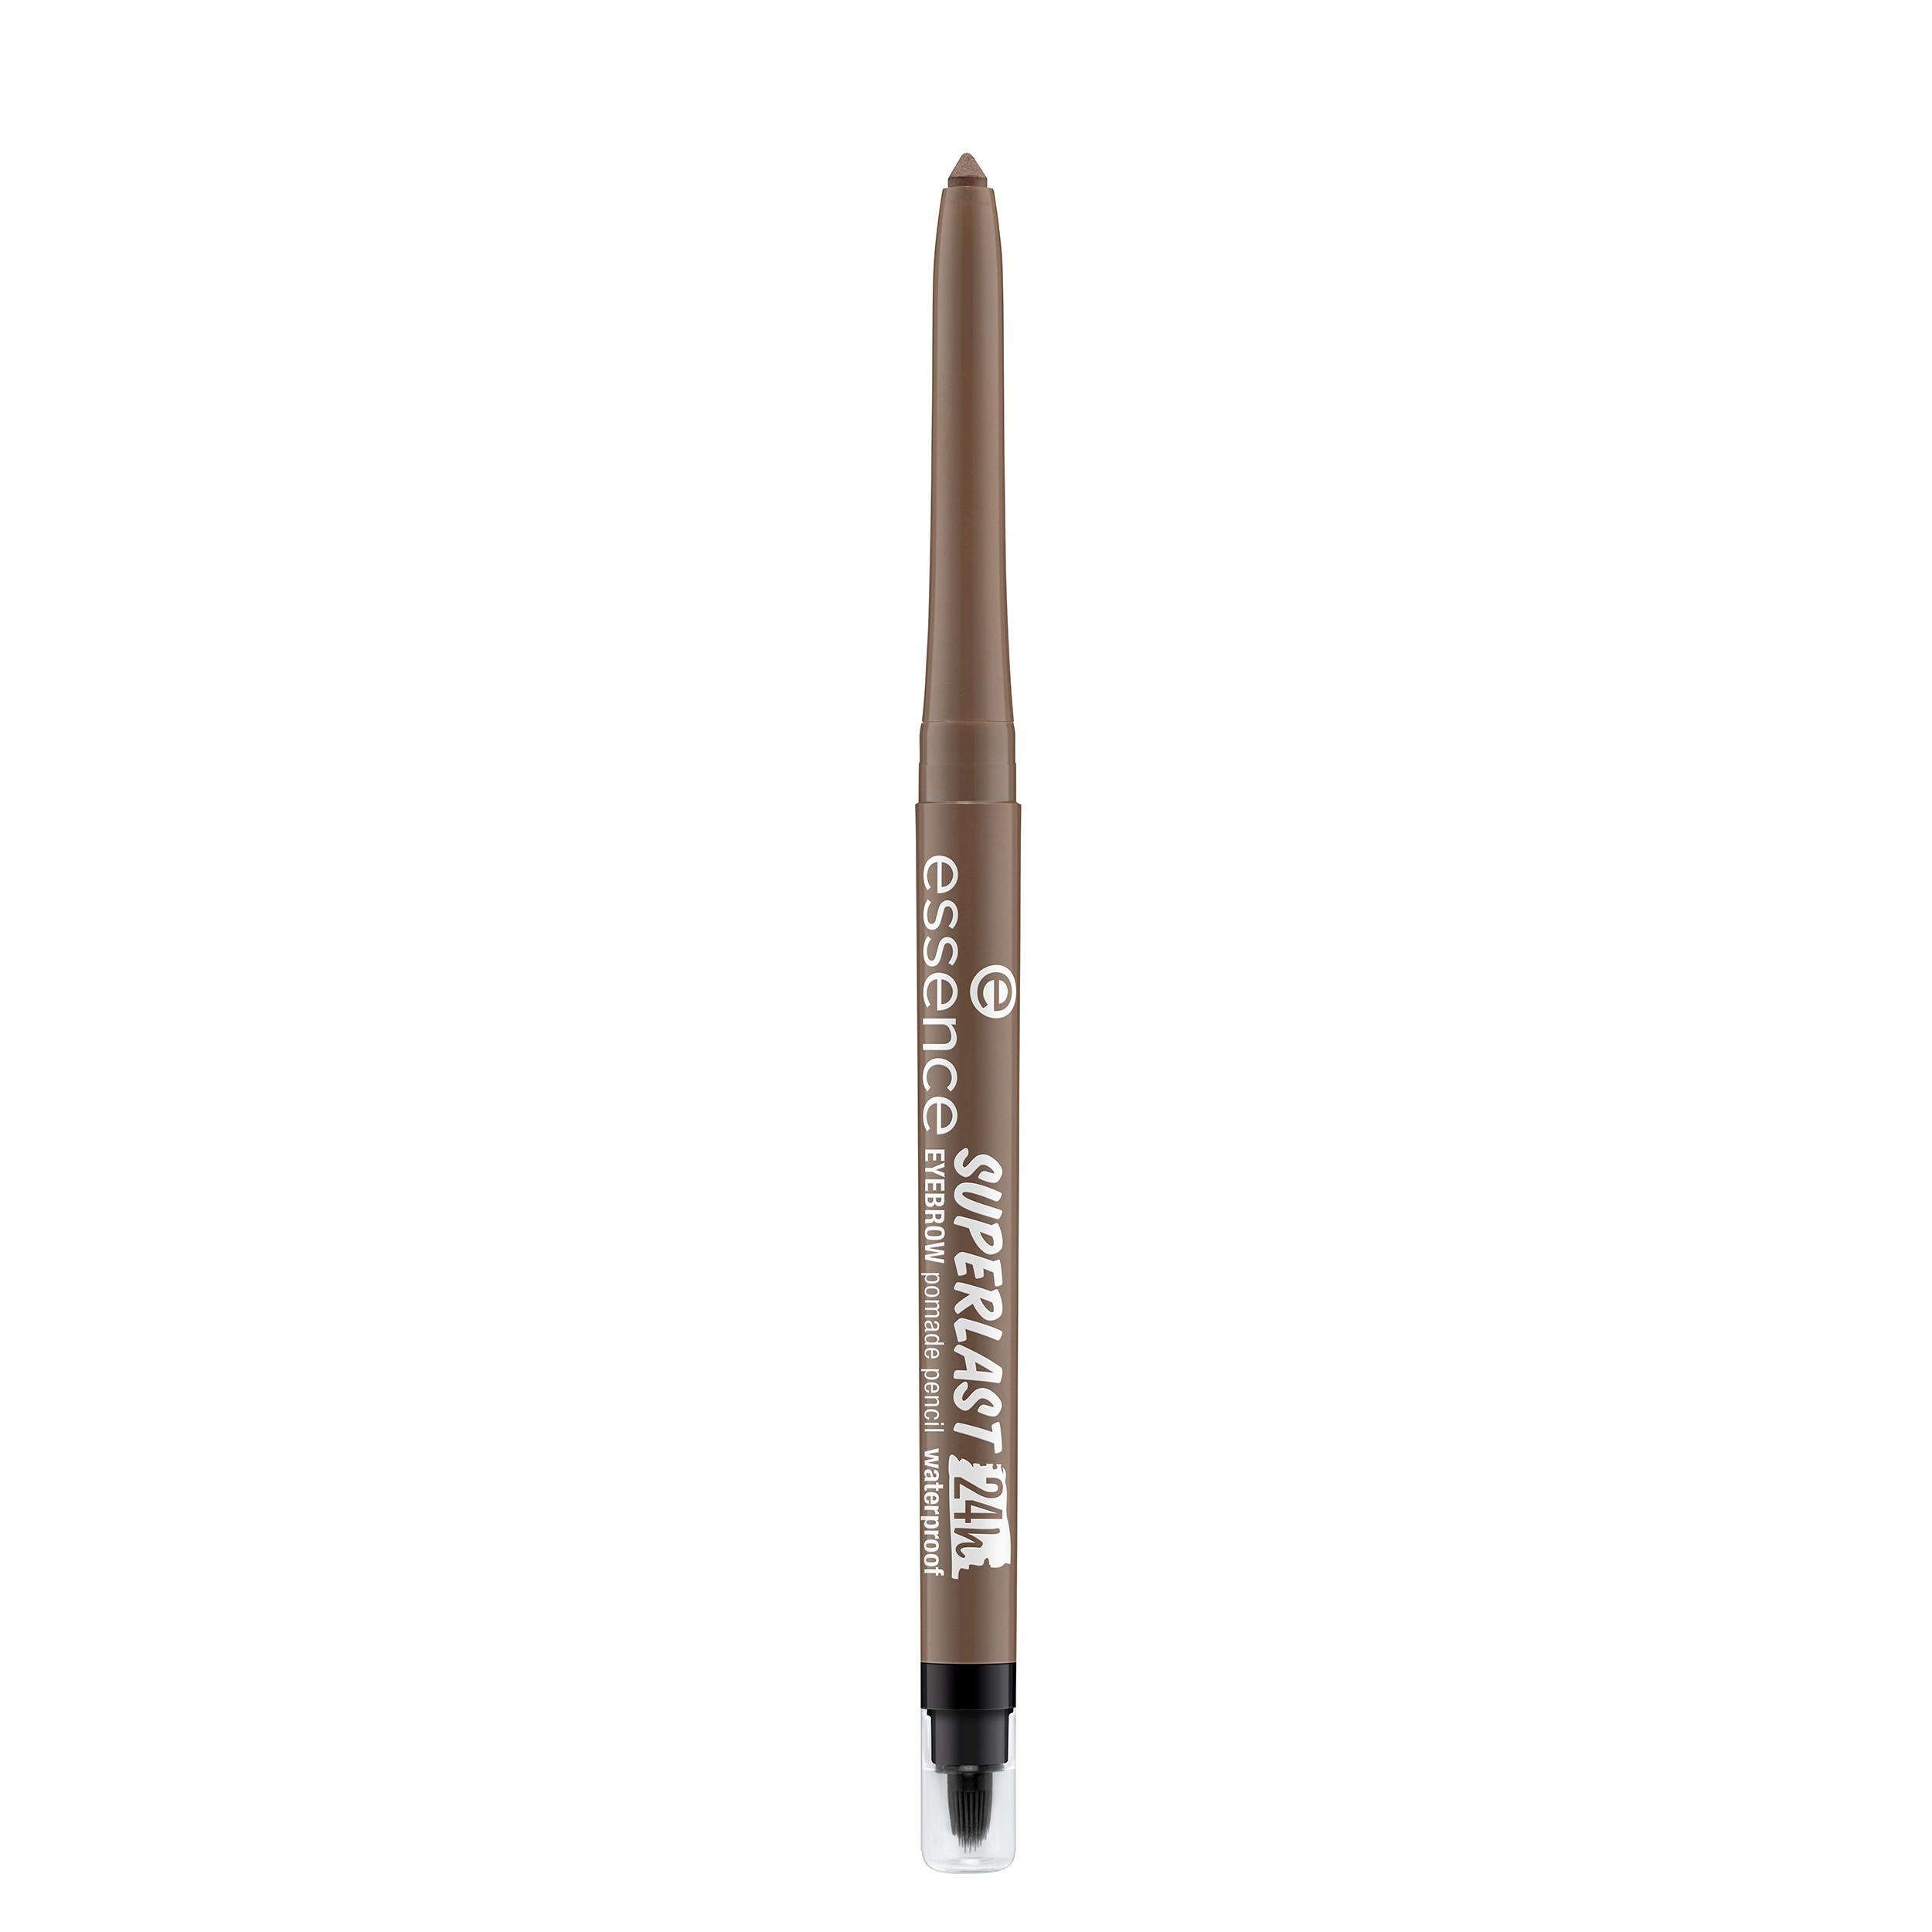 Augenbrauen-Stift - Superlast 24h Eyebrow Pomade Pencil Waterproof